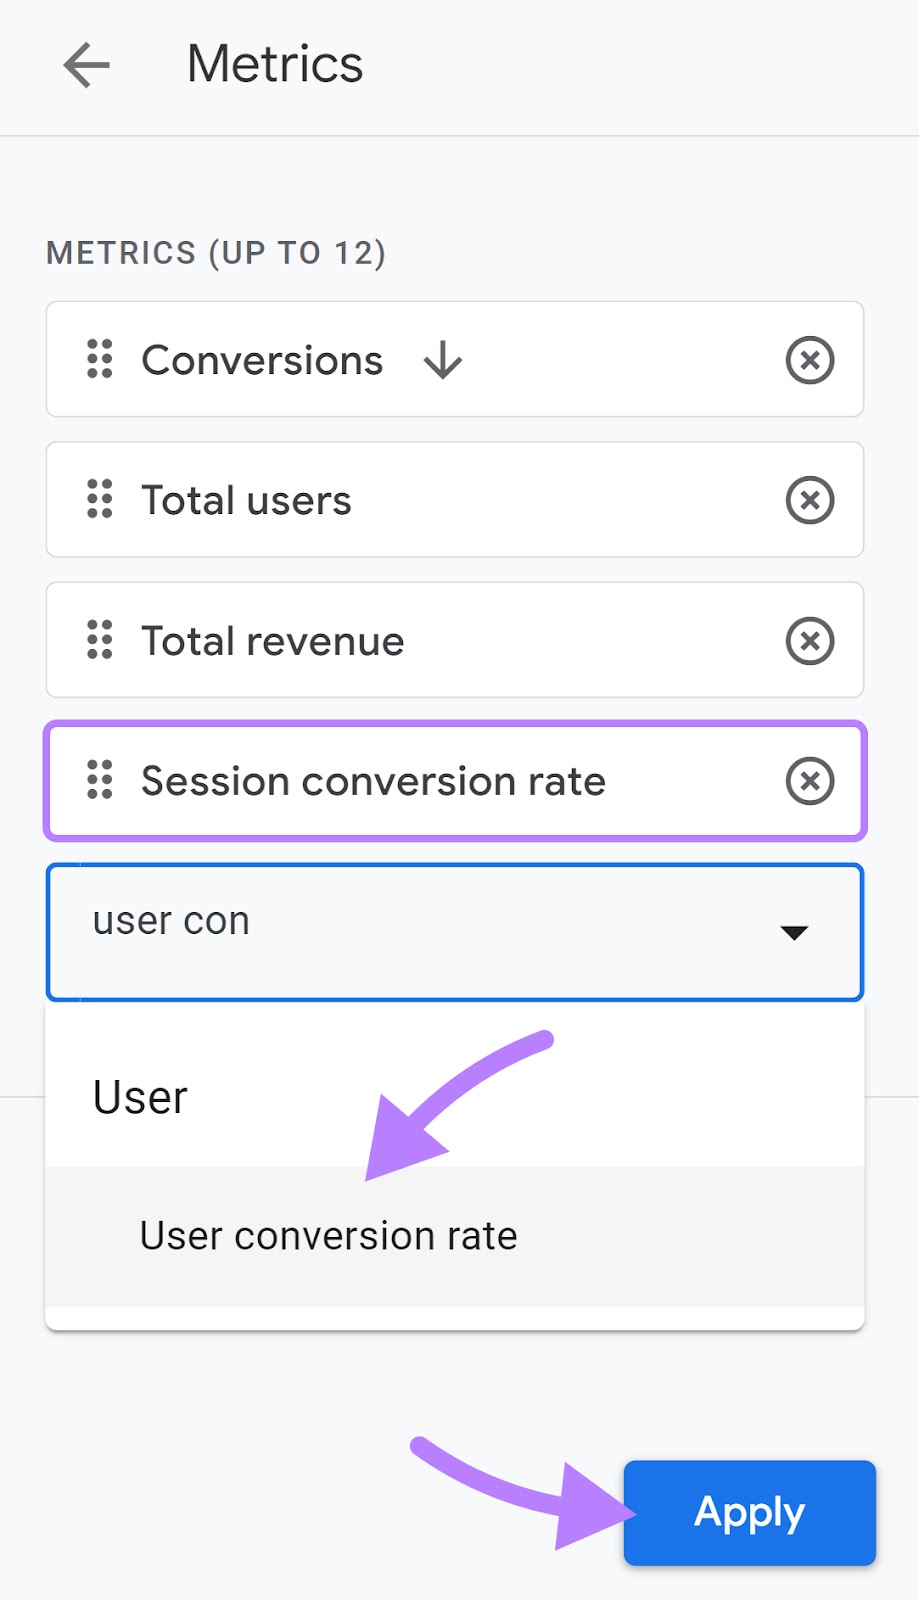 “User conversion rate" added under "Add metrics" field